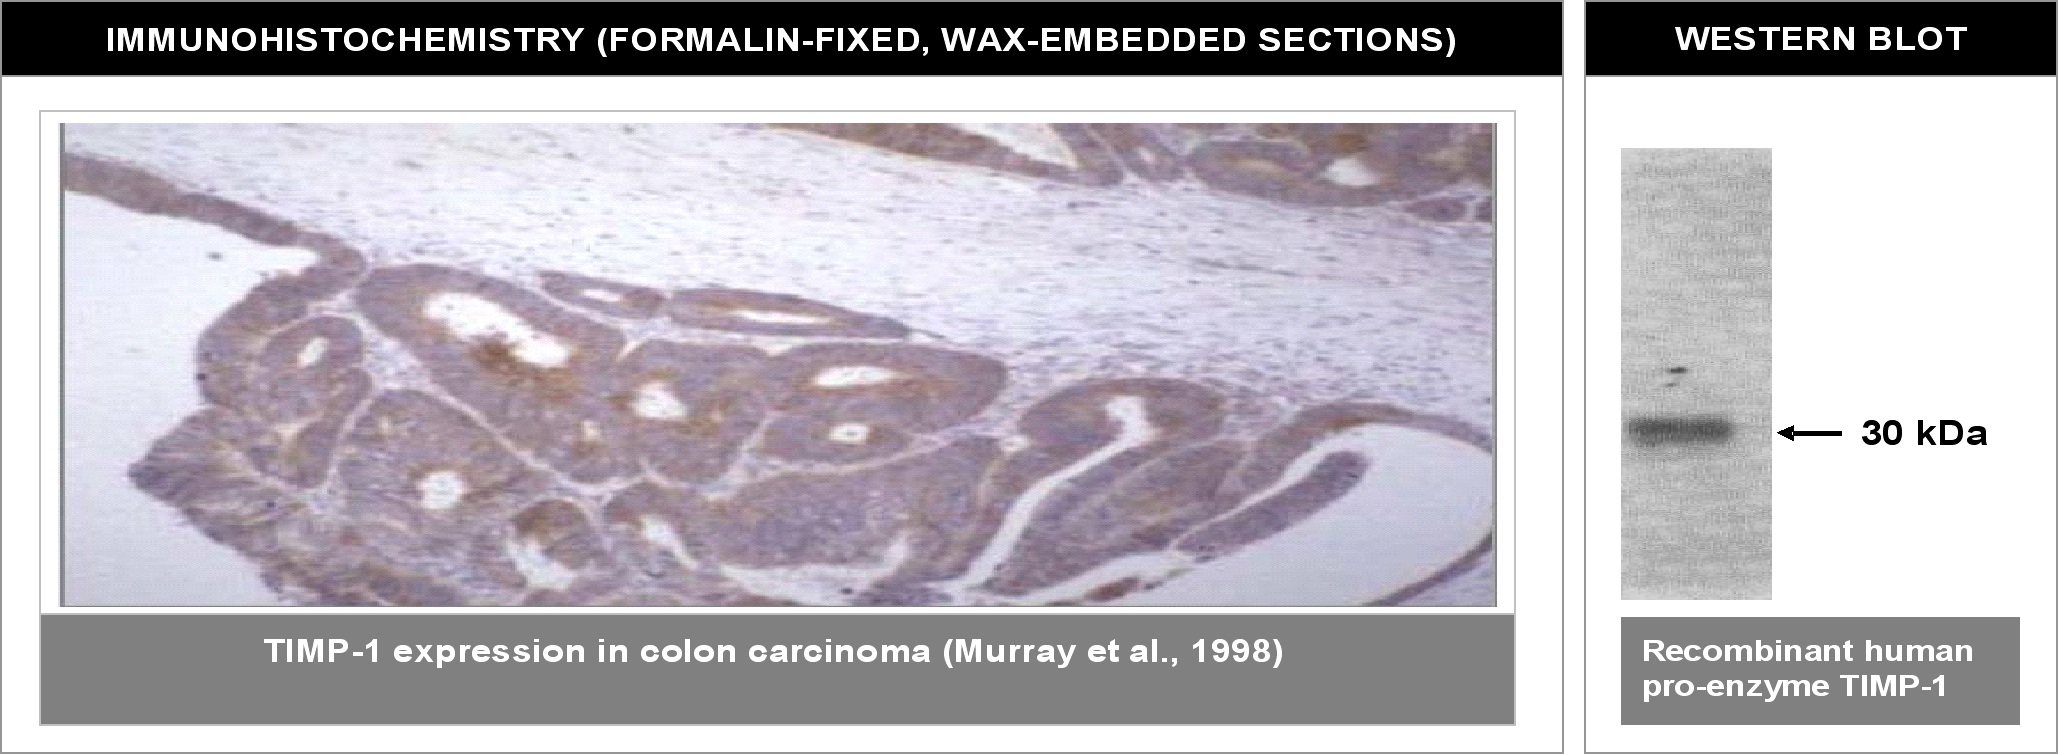 "
Left: Immunohistochemical staining of human colon carcinoma tissue using TIMP-1 antibody (Cat. No. X2058M).
Right: Western blot using TIMP-1 antibody against recombinant human TIMP-1 proenzyme (400 ng/lane)."